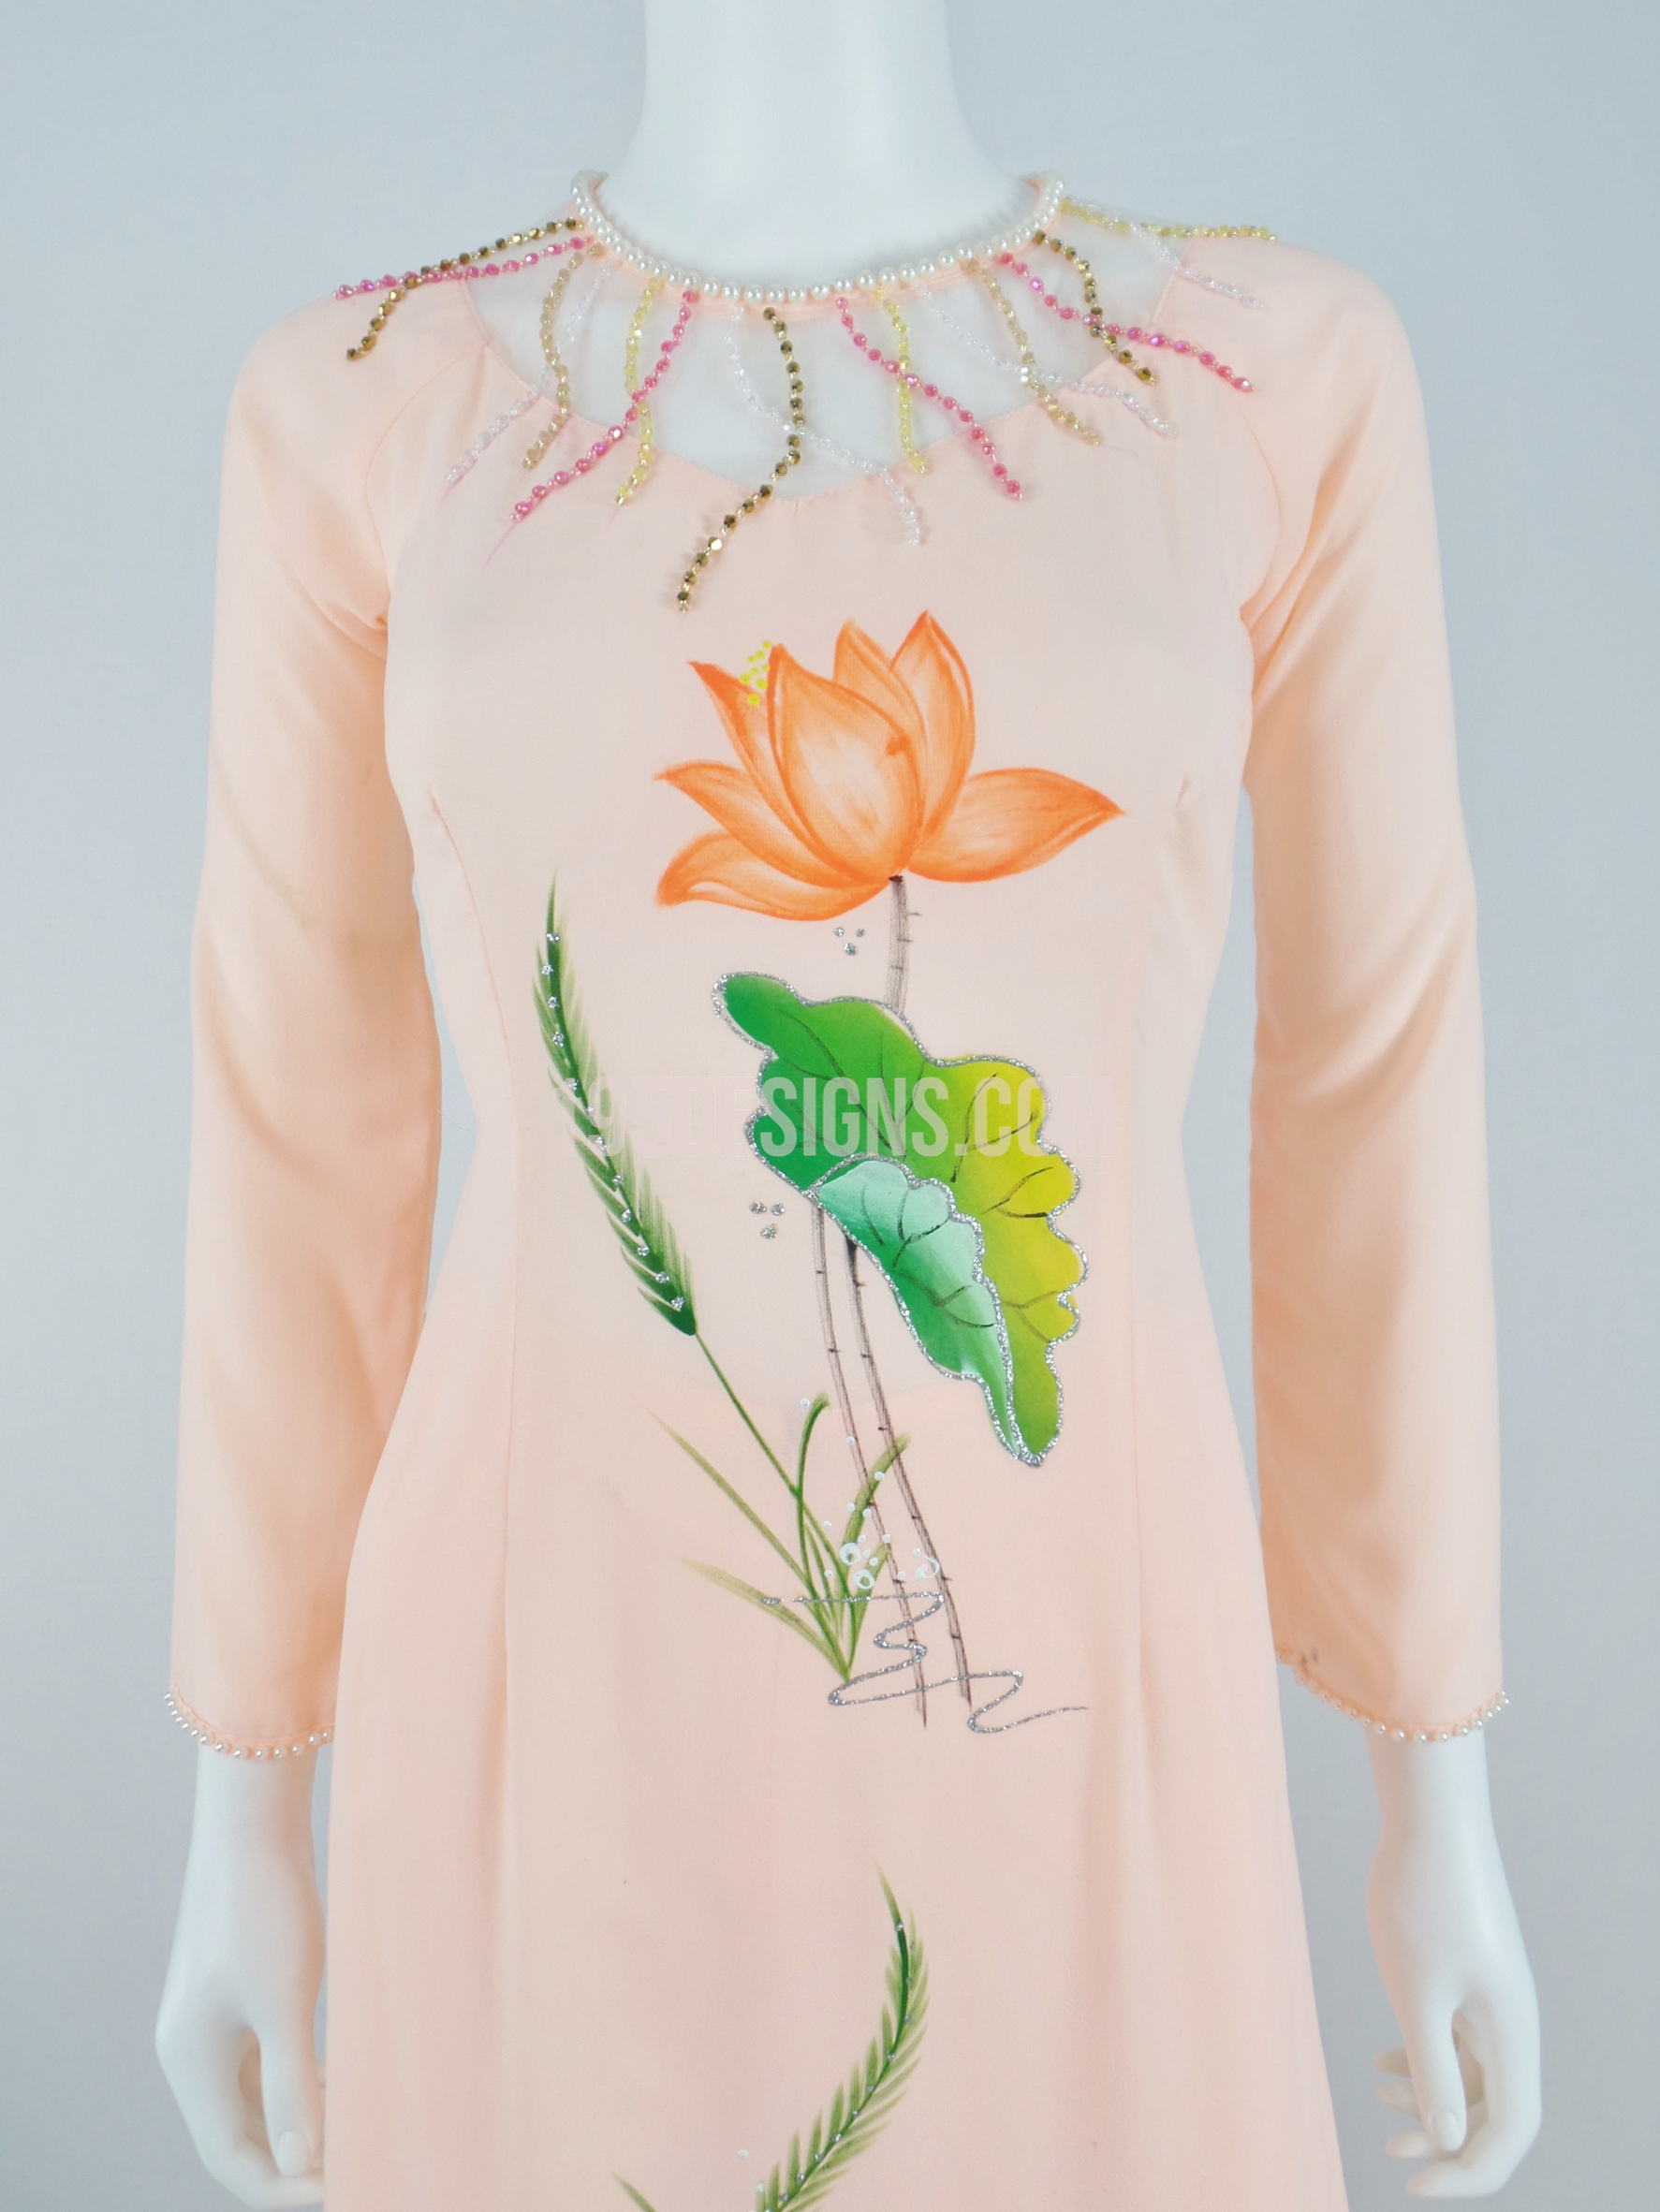 ÁO DÀI Cam Vẽ Hoa Sen  | Carol AO DAI Paint Lotus flower Set Size 8